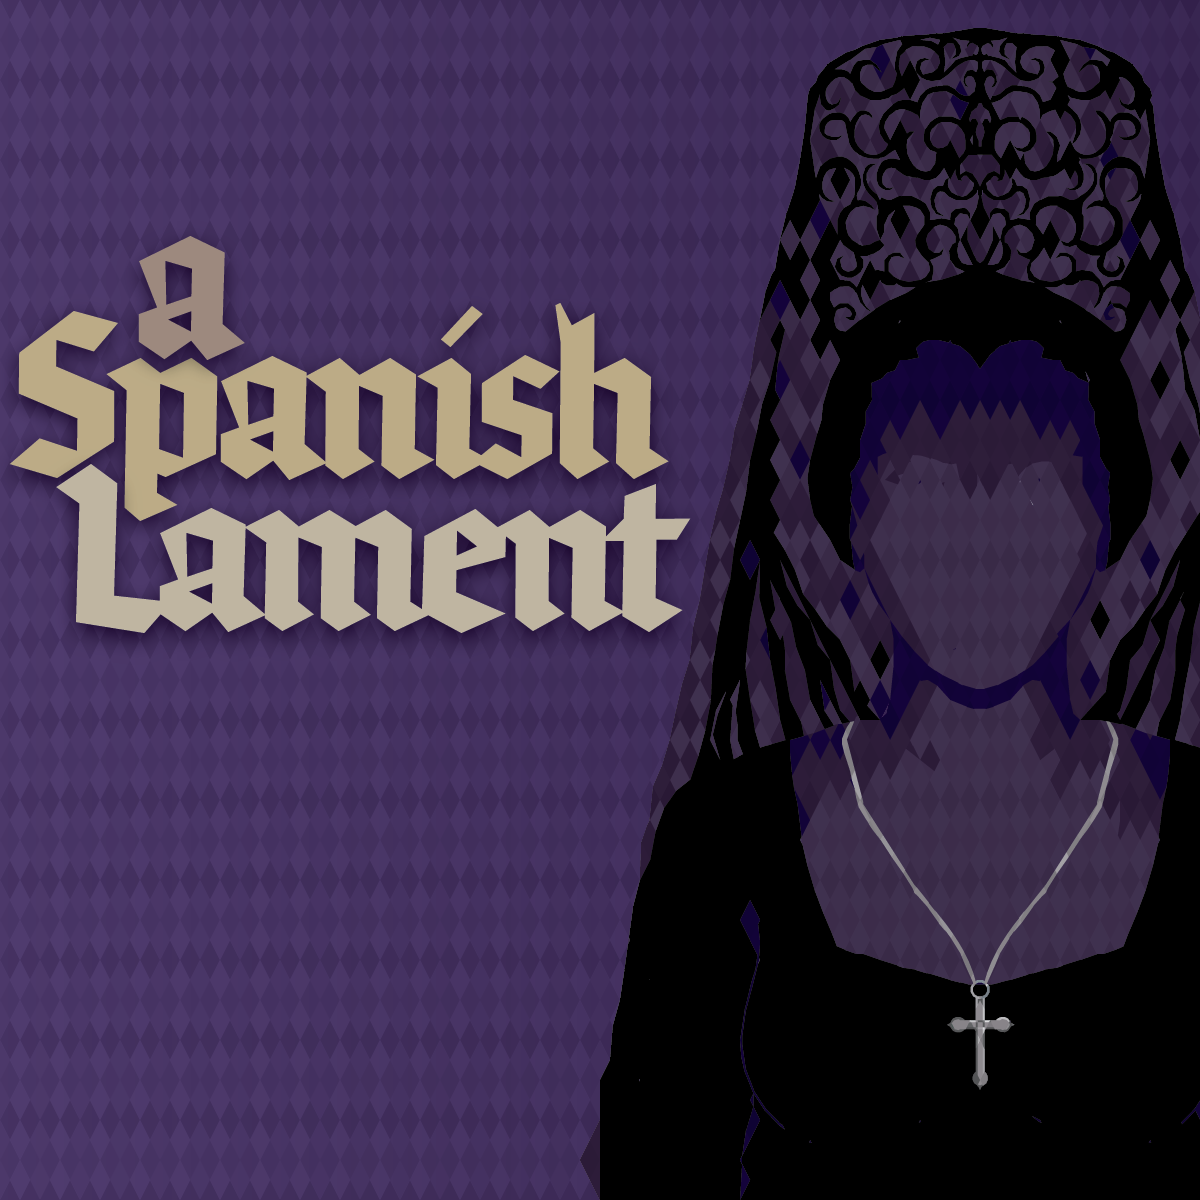 A Spanish Lament concert poster